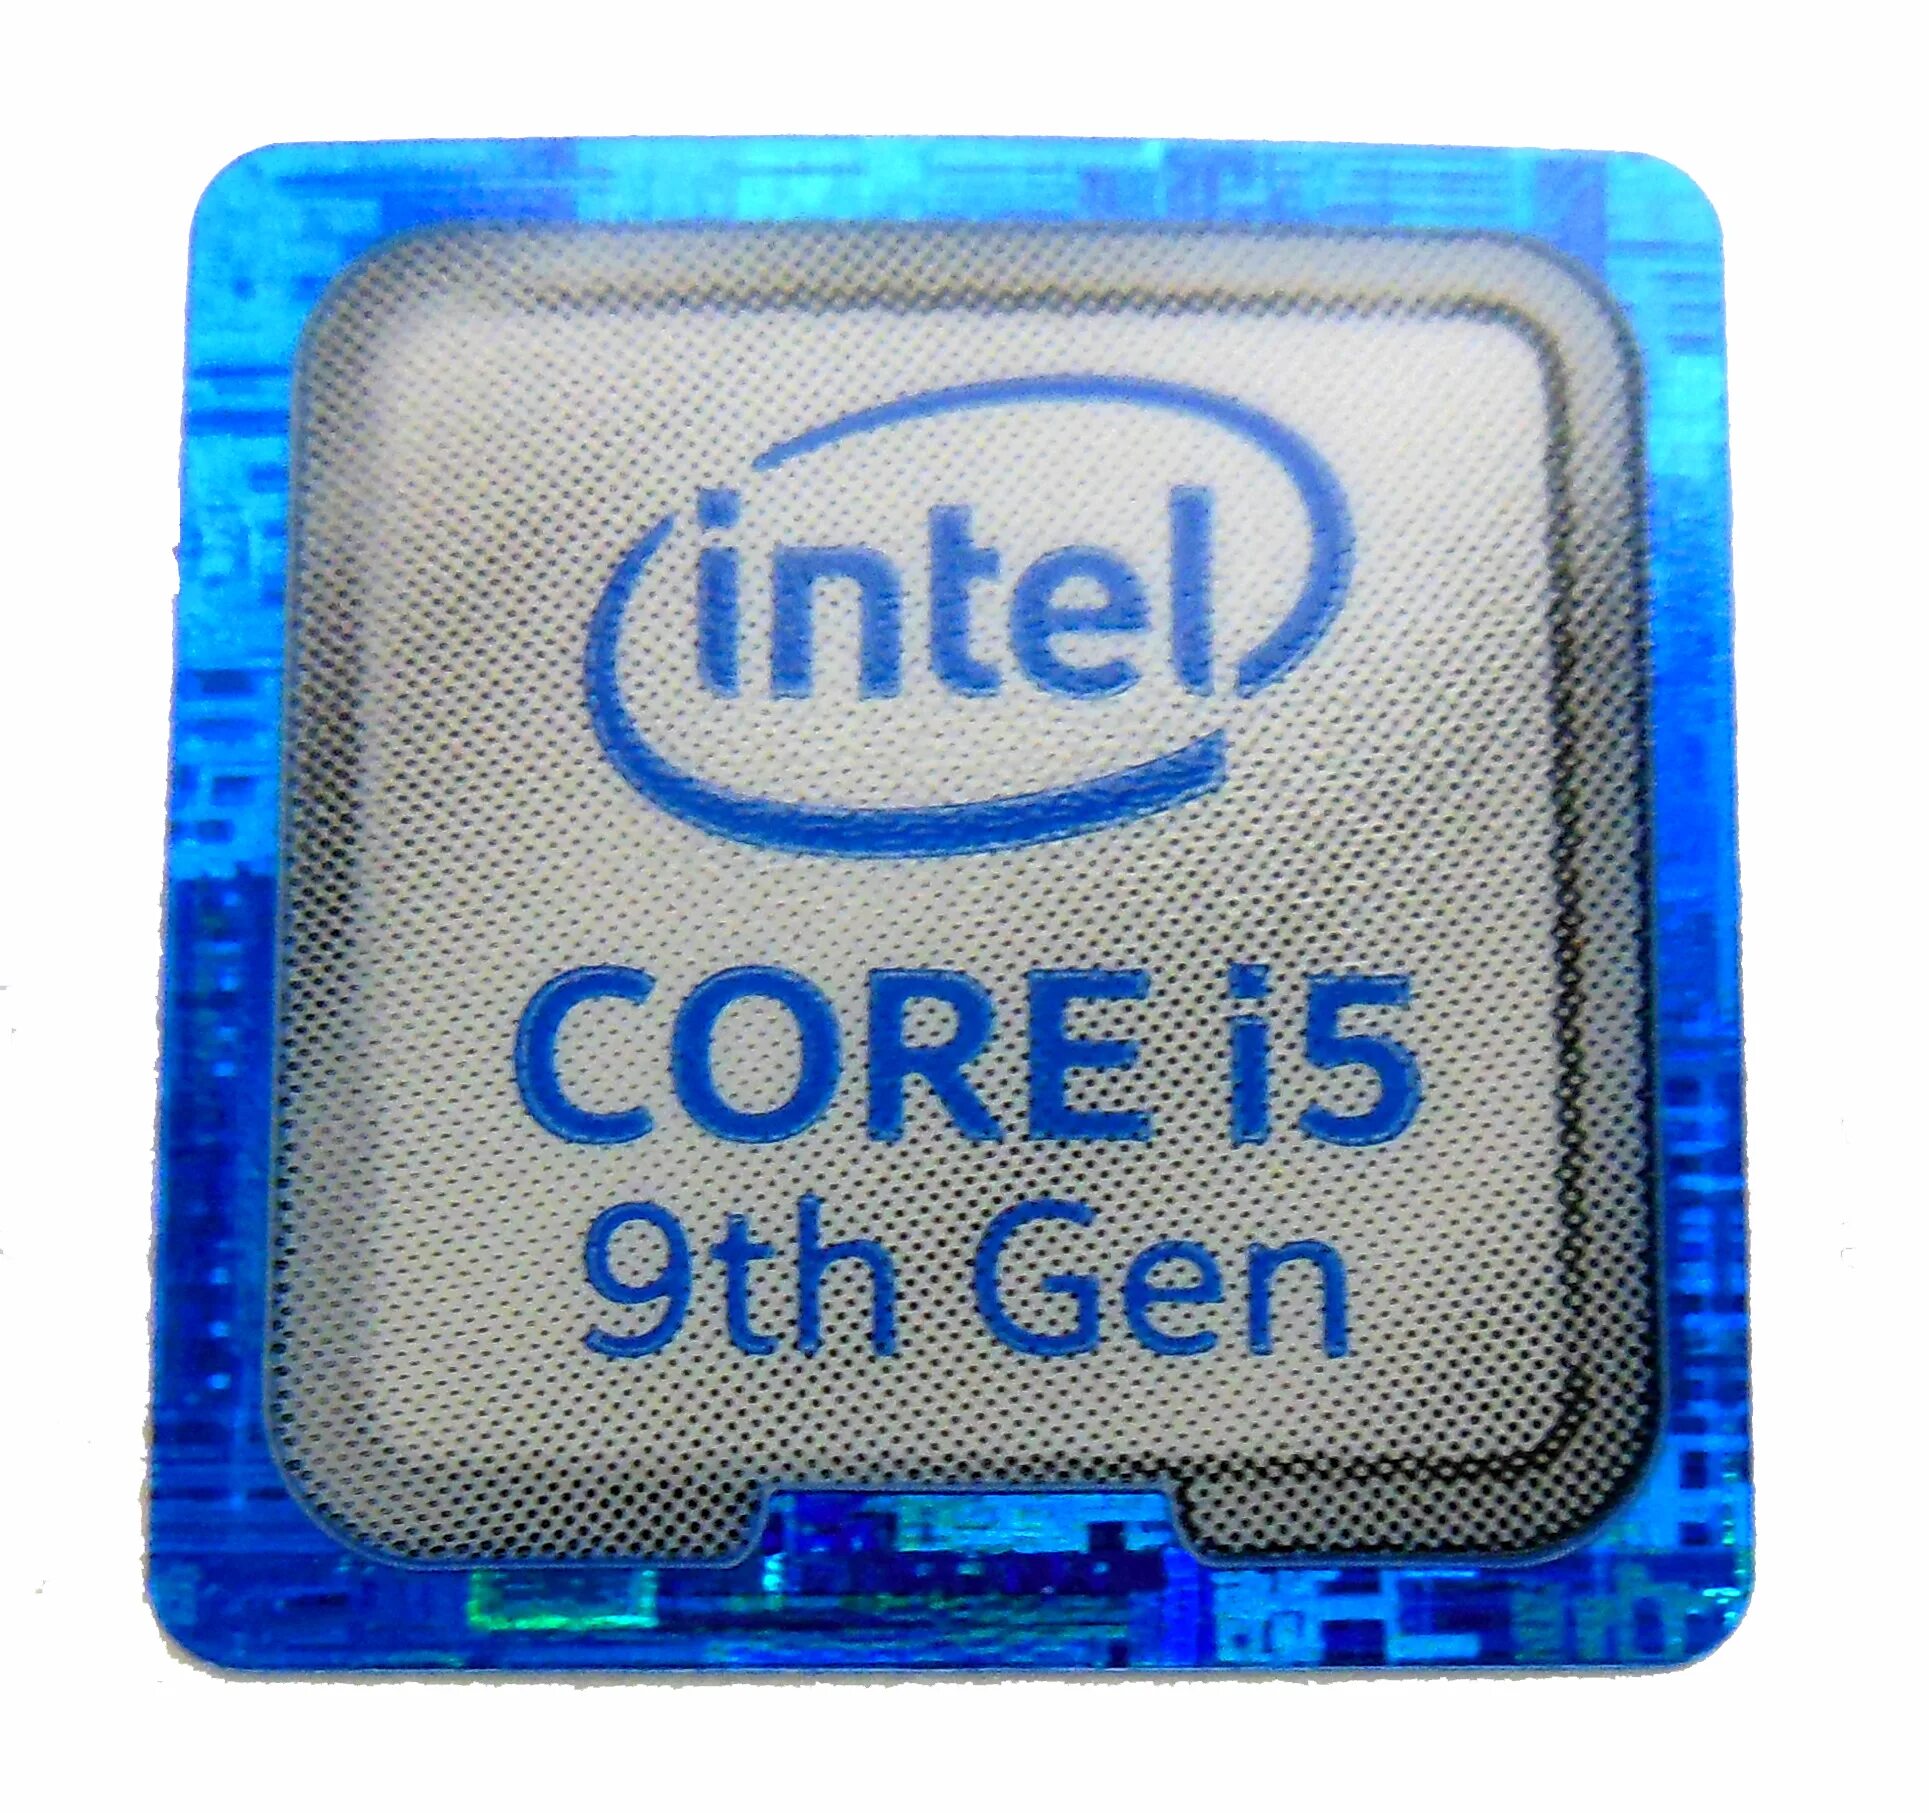 I5 13 поколения. Intel Core i5. Intel-Core i713700. Intel Core i5 10th Gen. Иконки Intel Core i5.